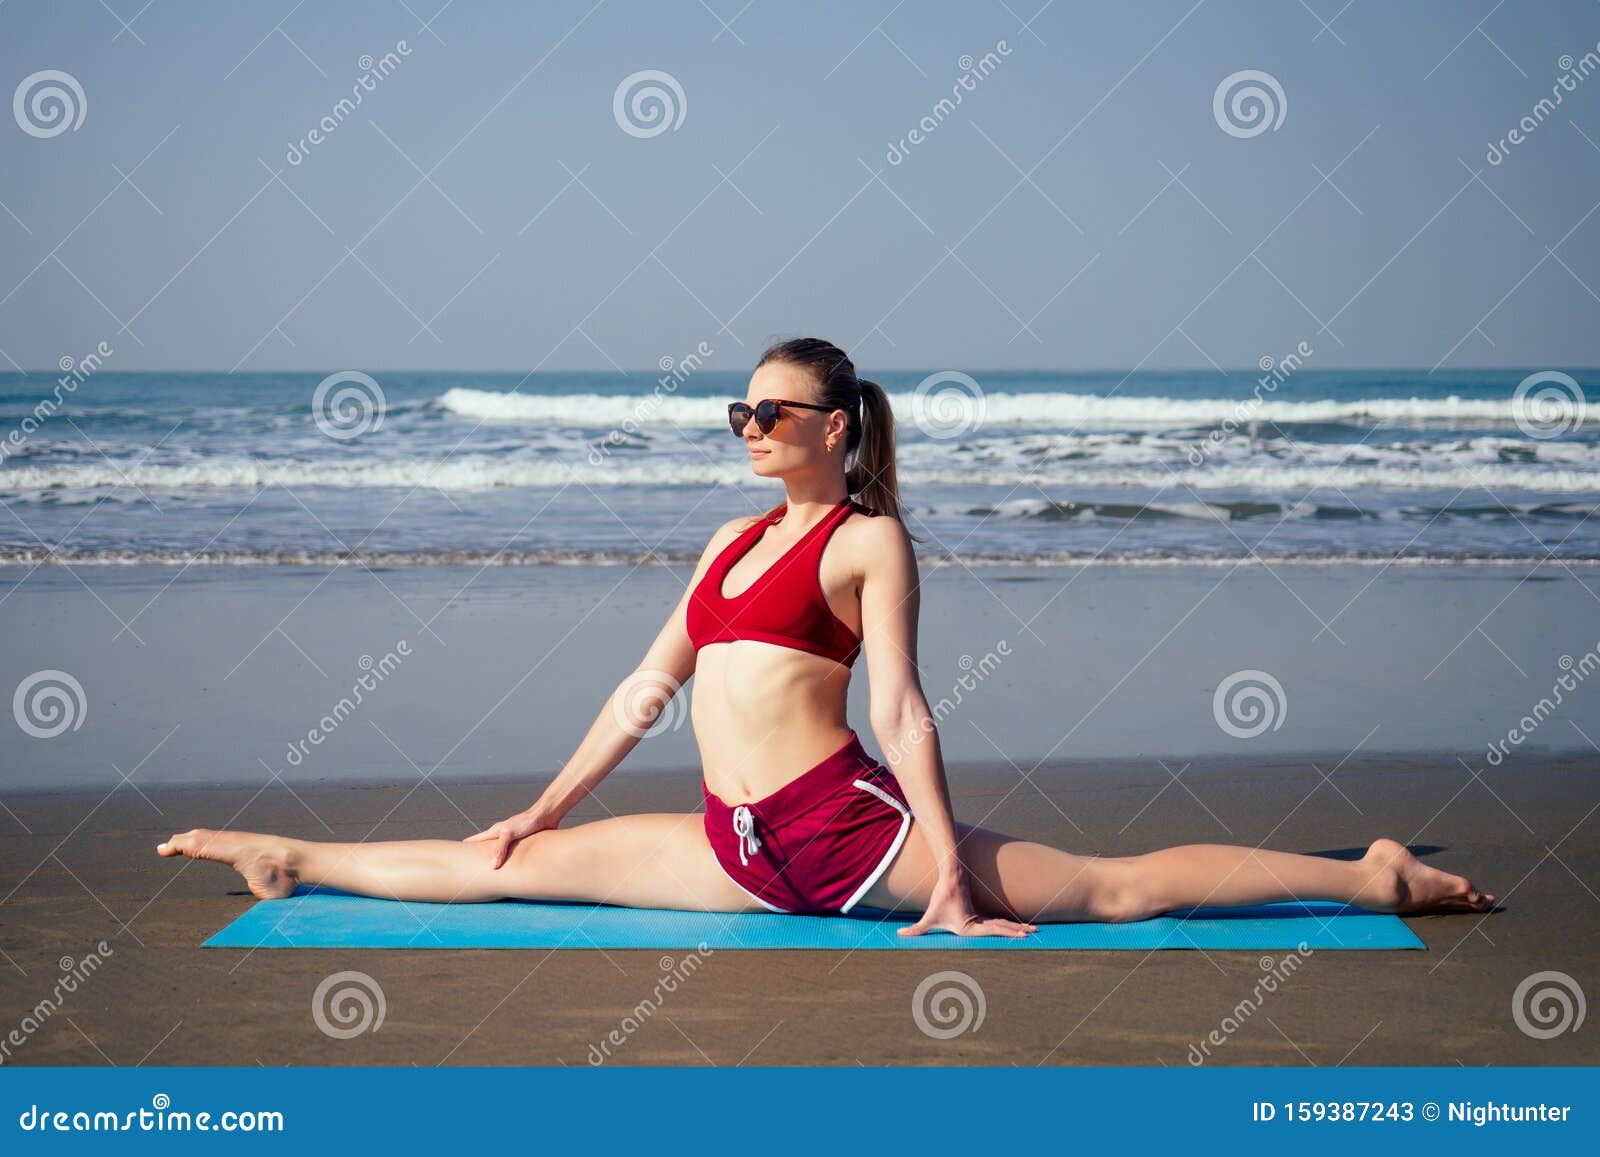 Muladhara Swadhisthana Manipula Tantra Yoga on the Beach Woman